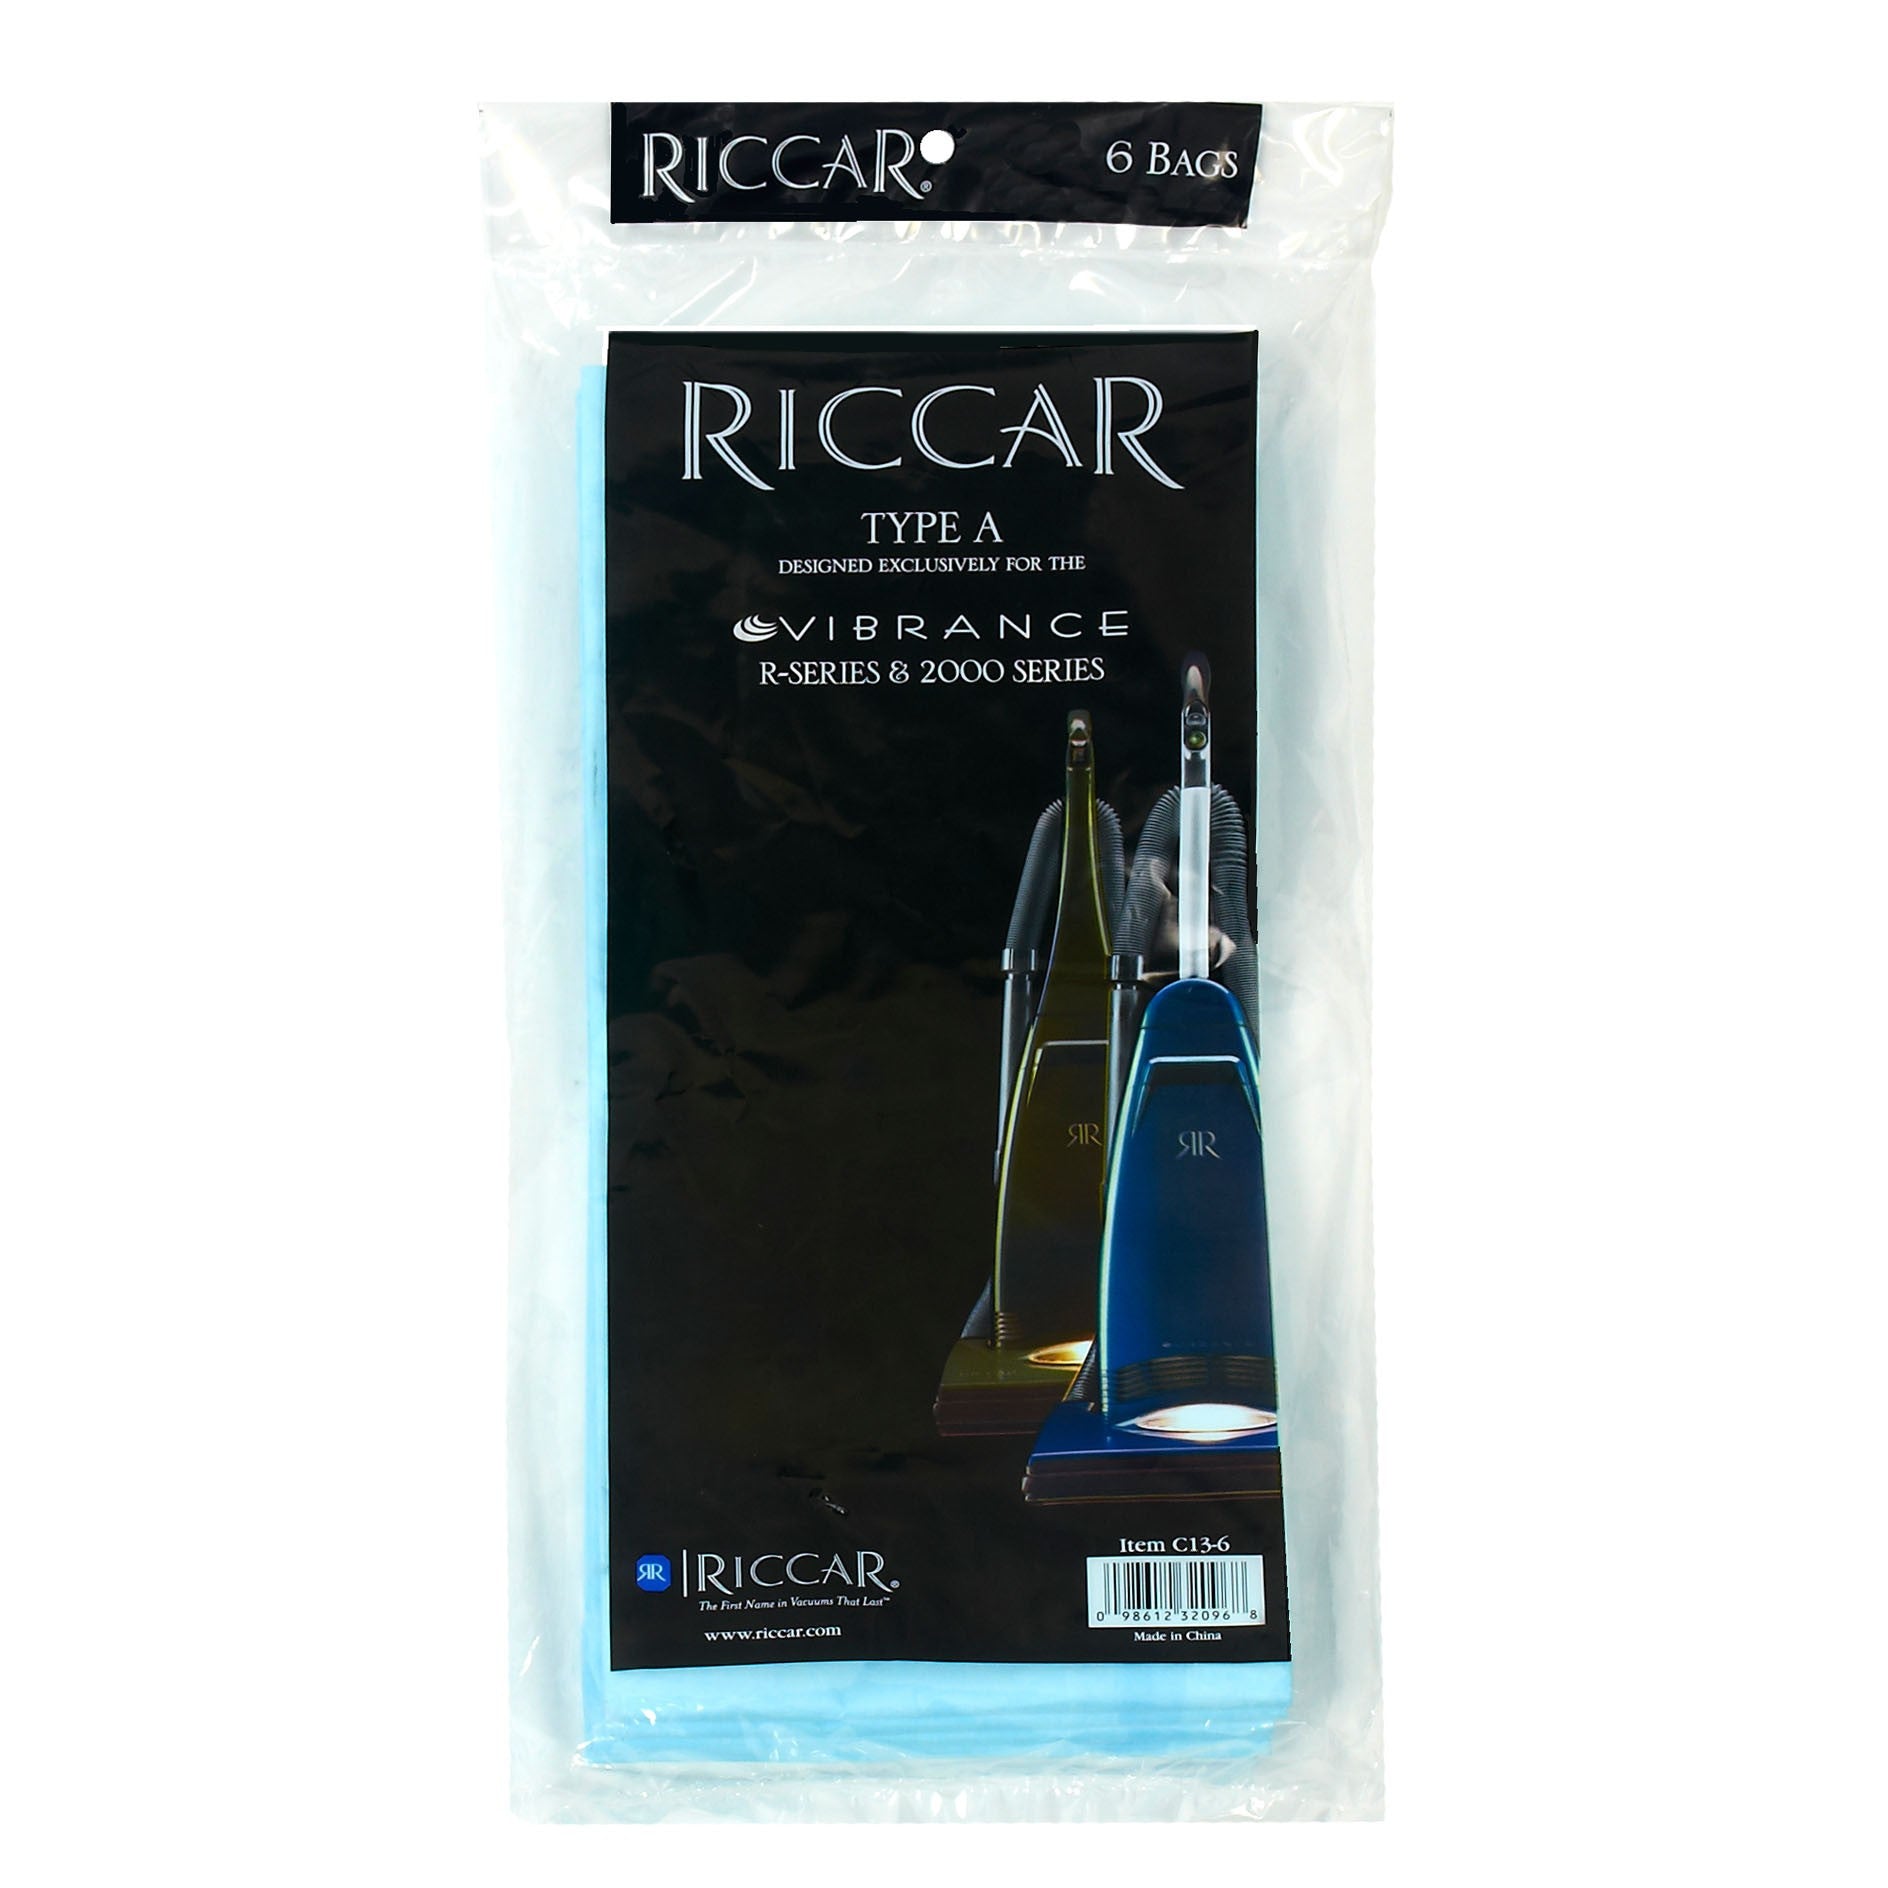 Riccar Paper Vacuum Bags for Vibrance & R Series (6 Pack) Part # C13-6